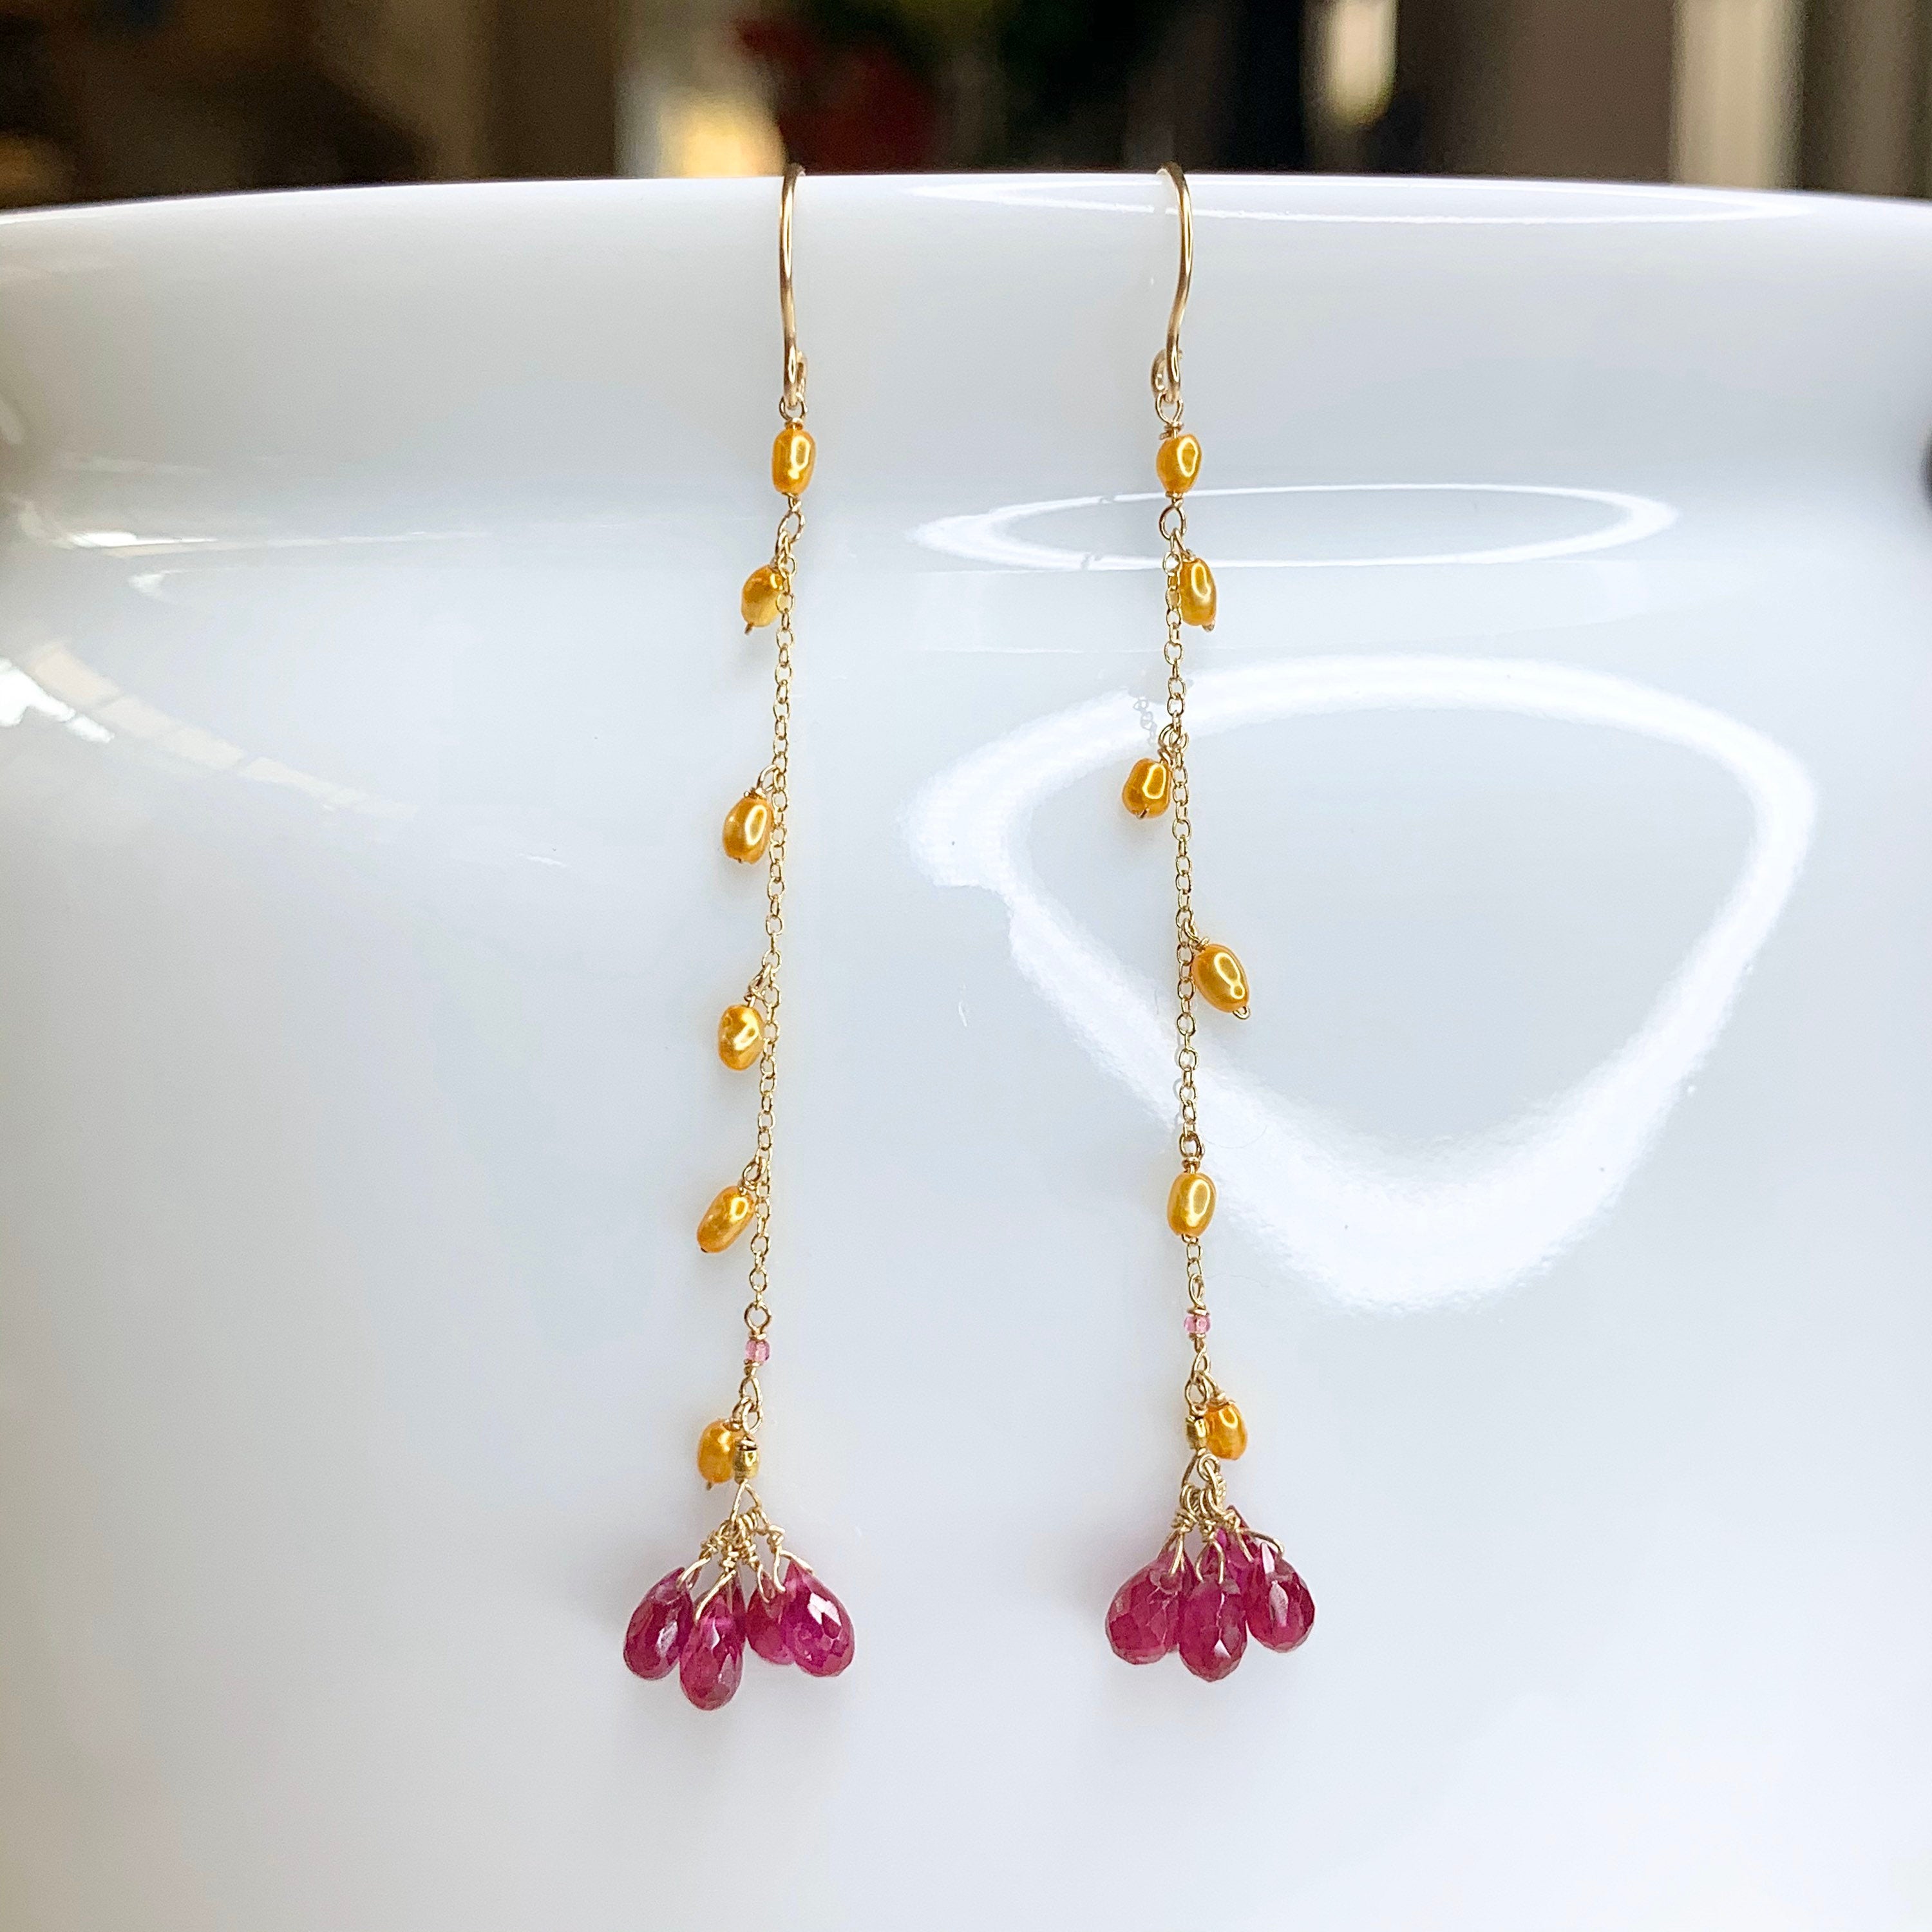 14k Gold Earrings w/ Rubies, Freshwater Pearls & 18k Gold Nugget